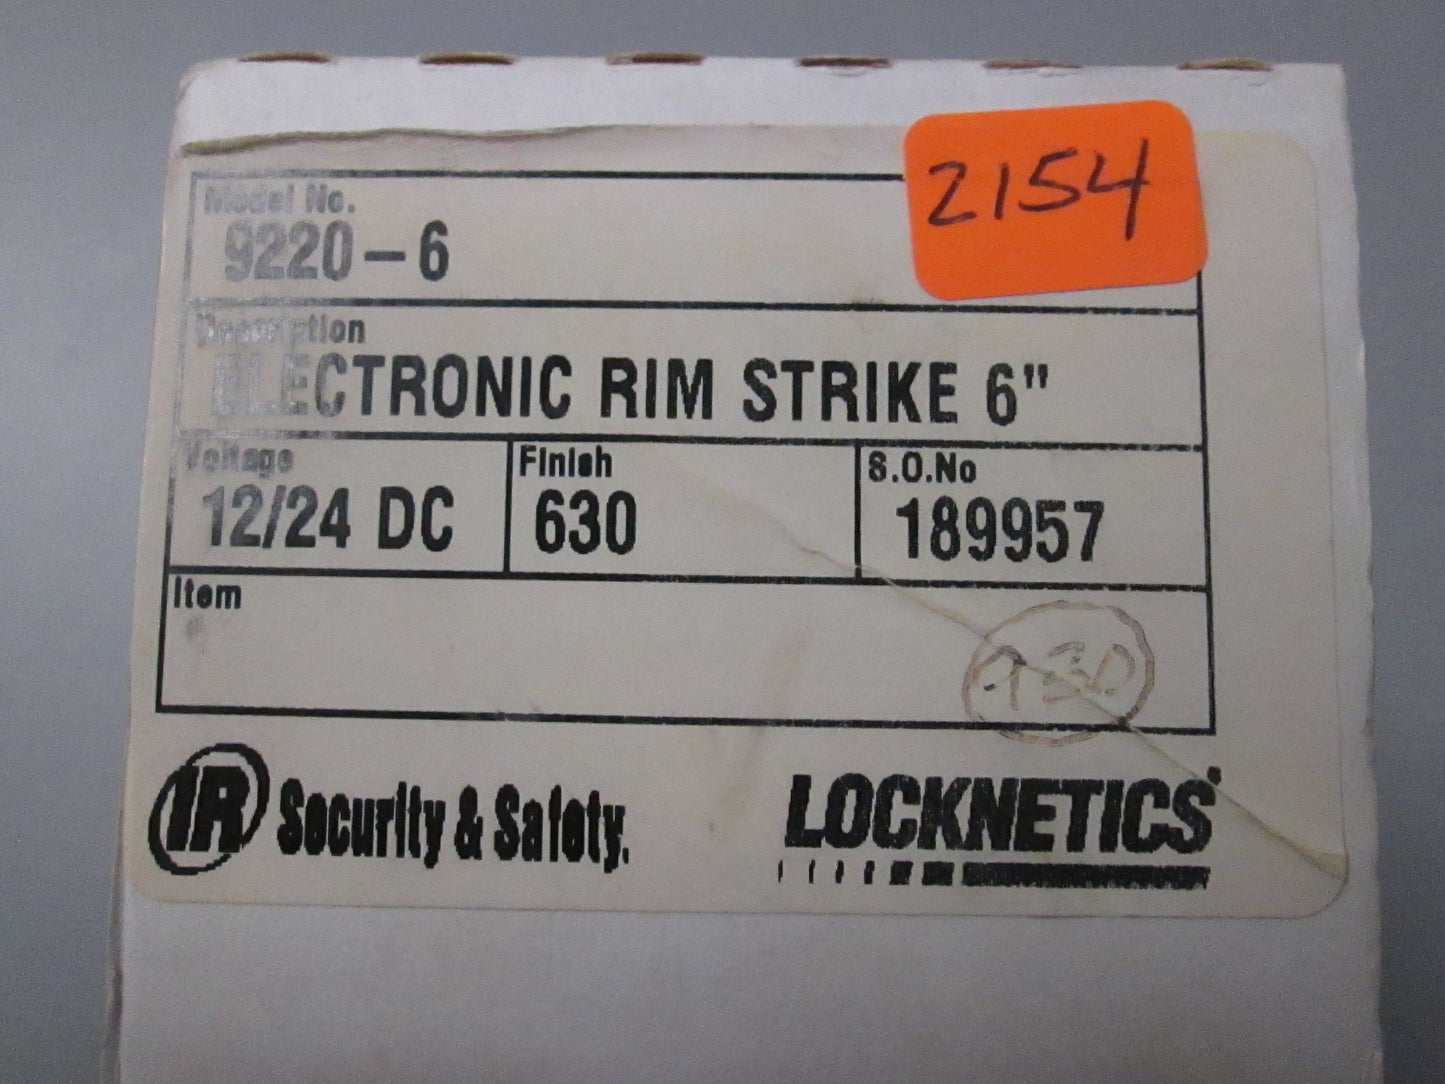 Locknetics 9220-6 Electric Strike 630